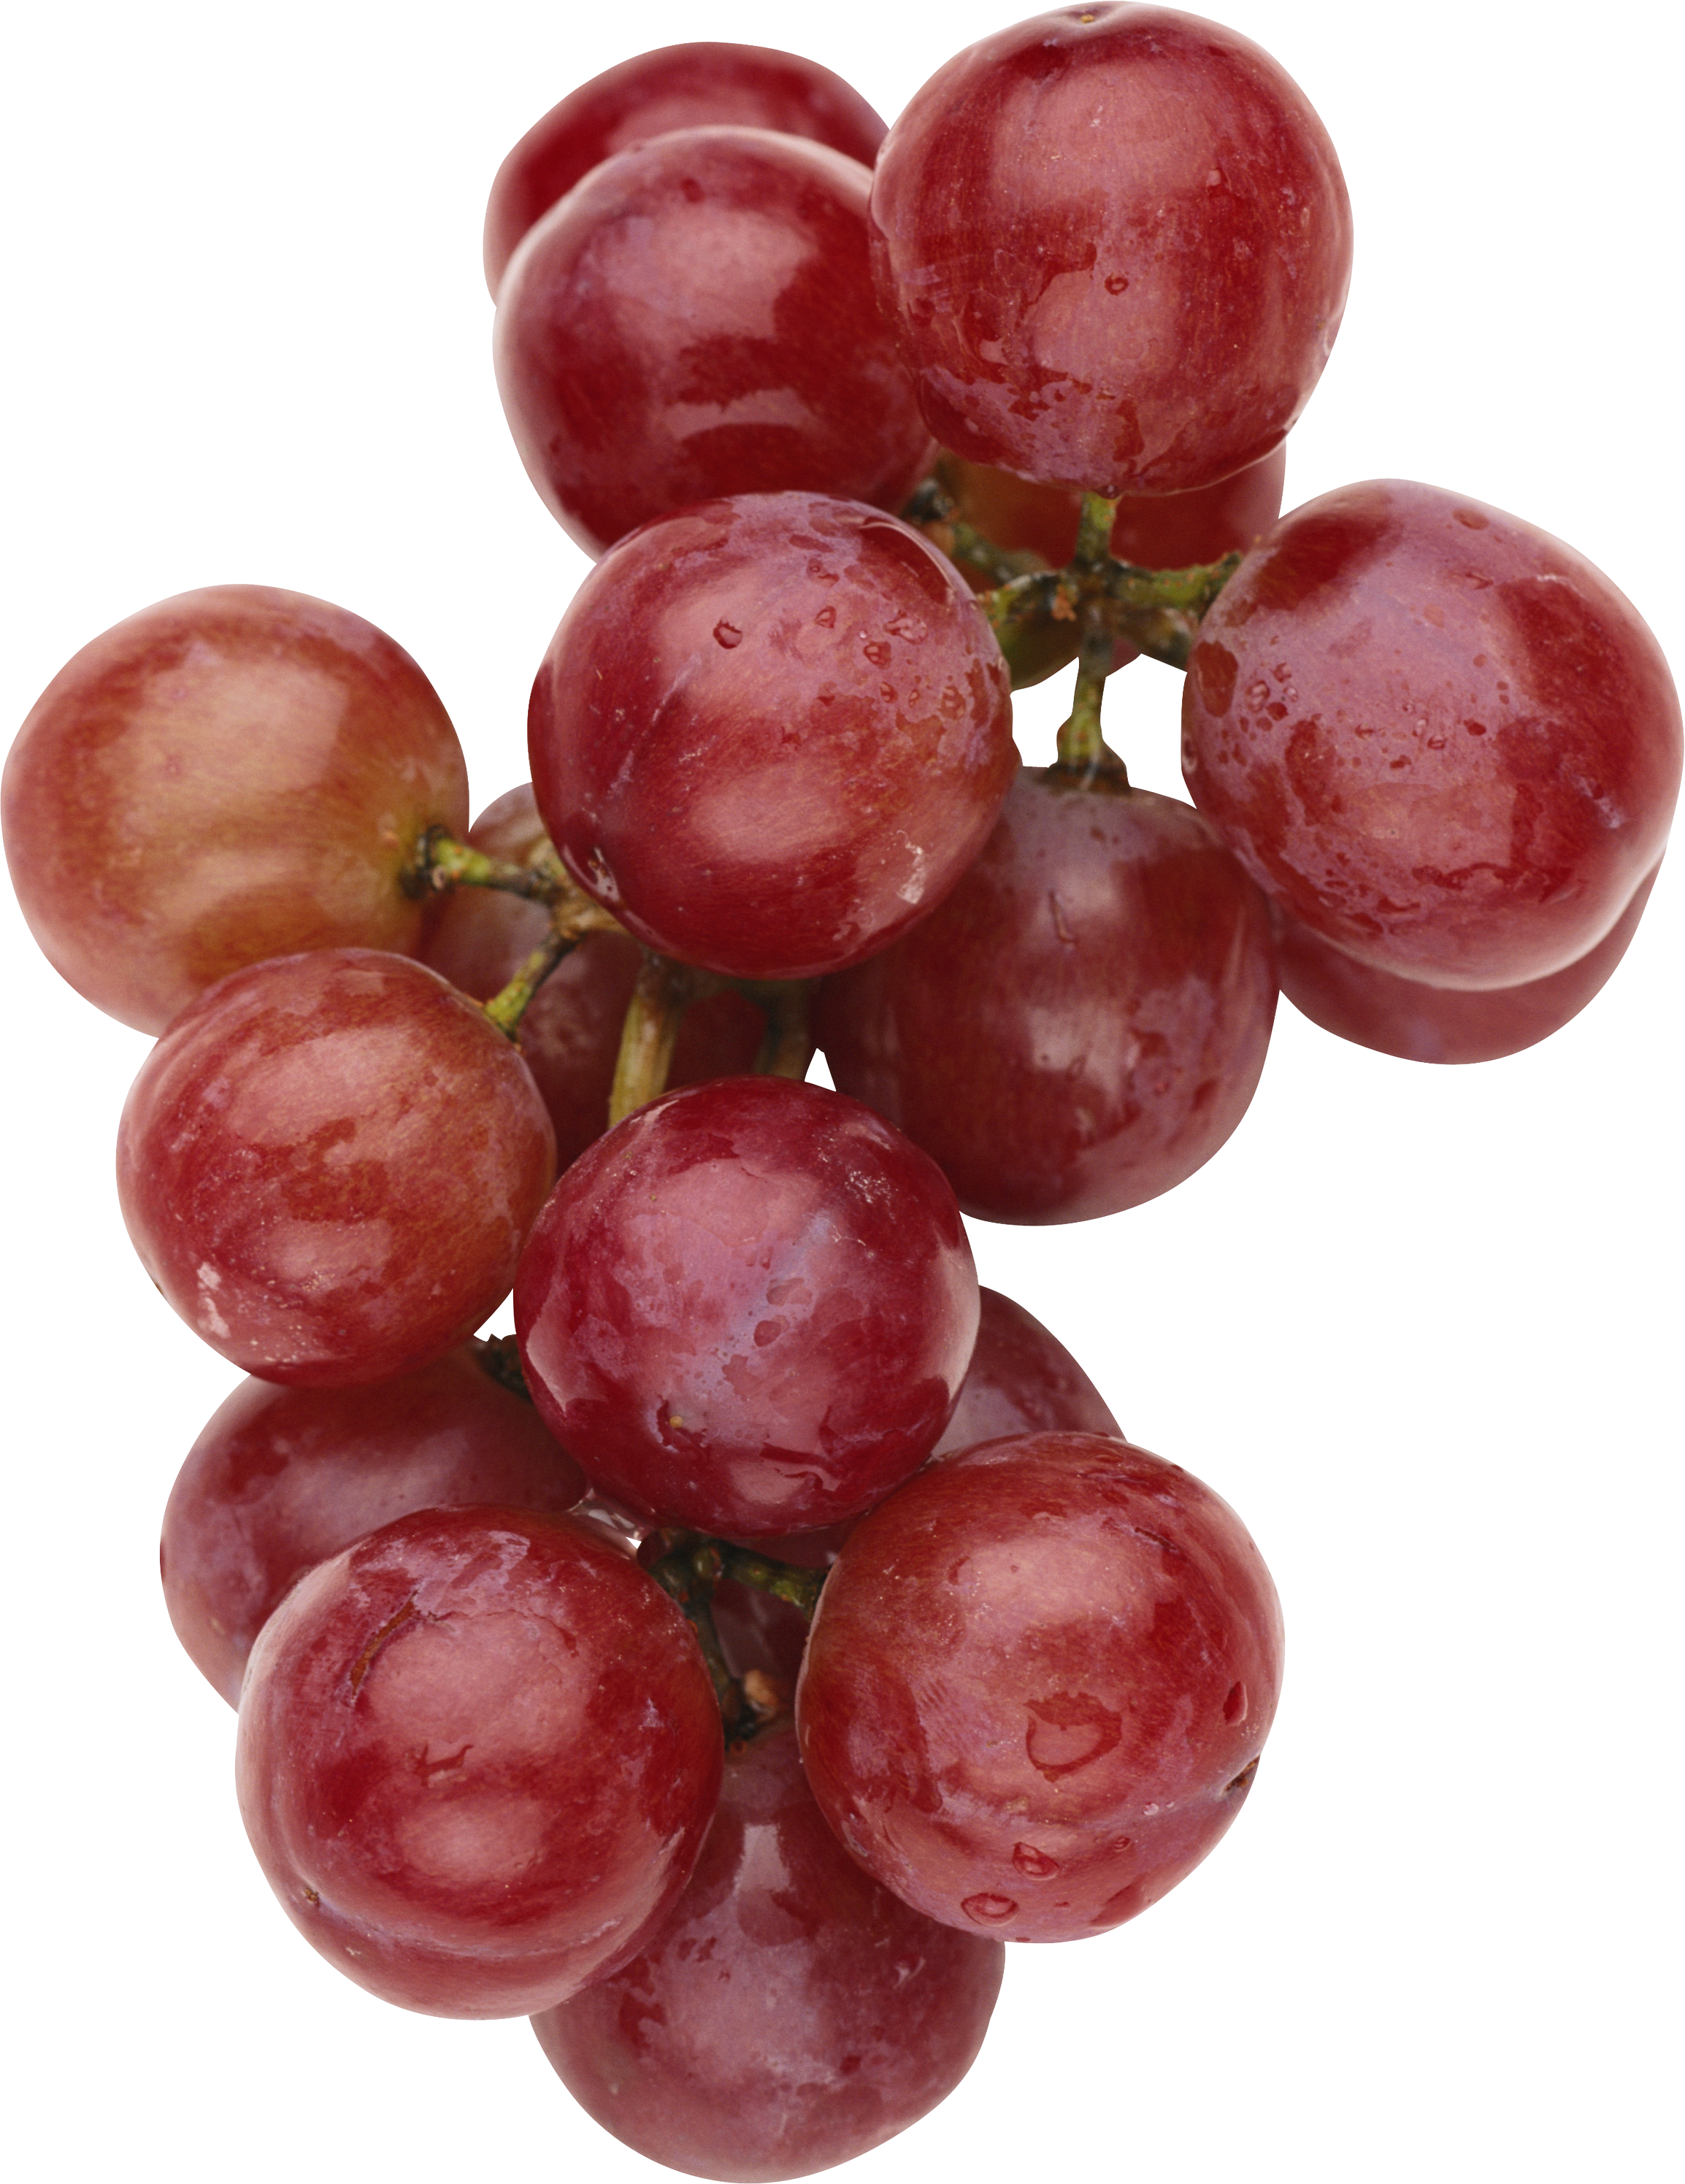 grape clipart health food